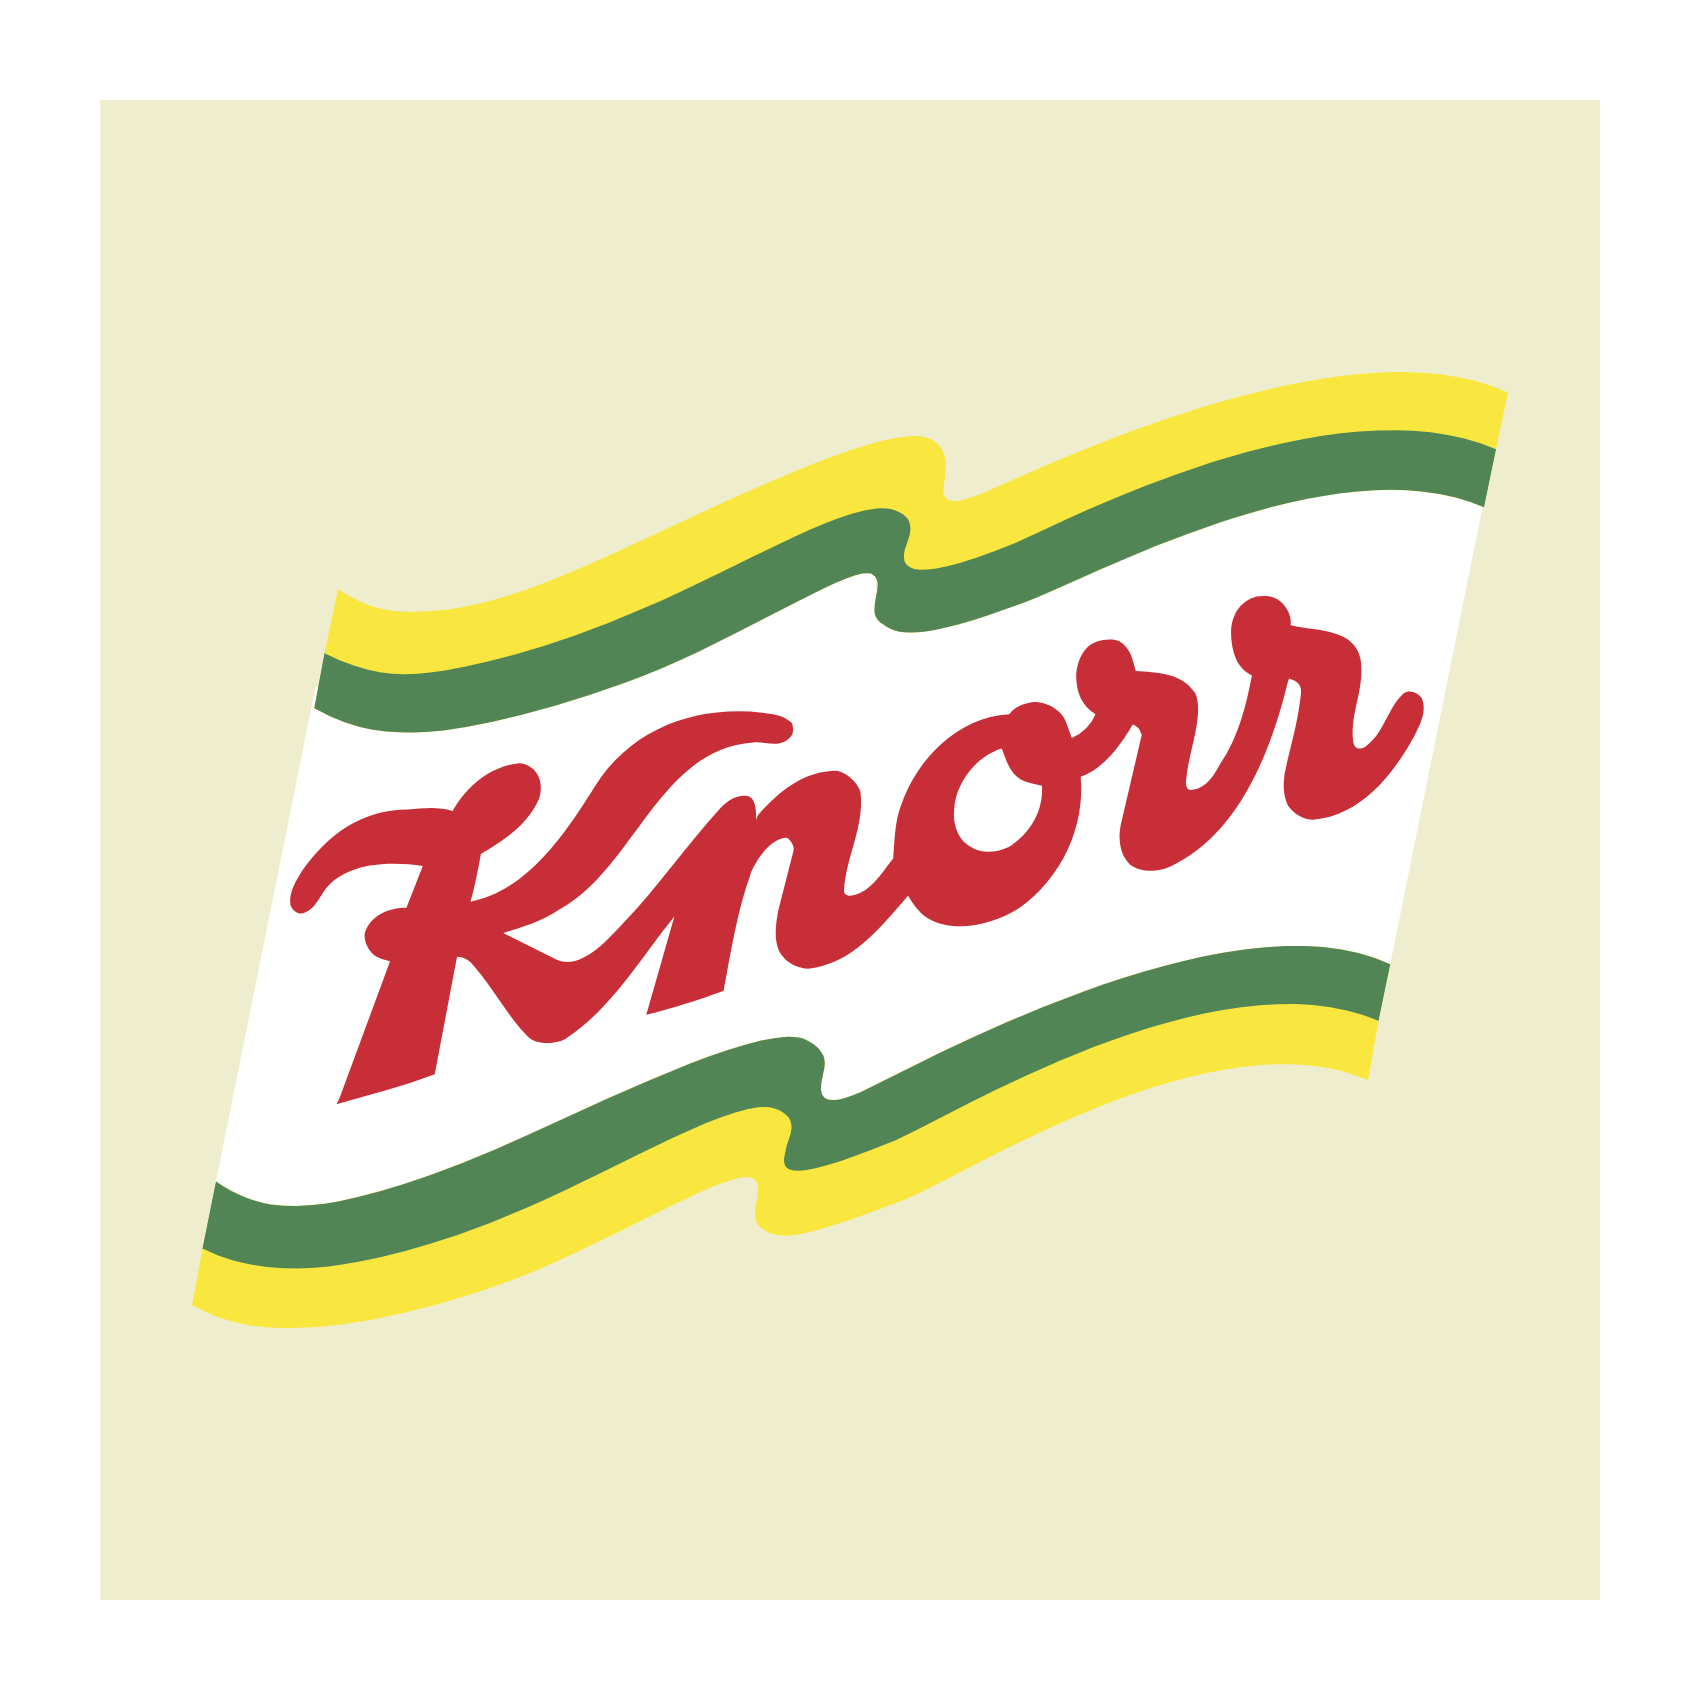 Knorr Vector Art & Graphics | freevector.com